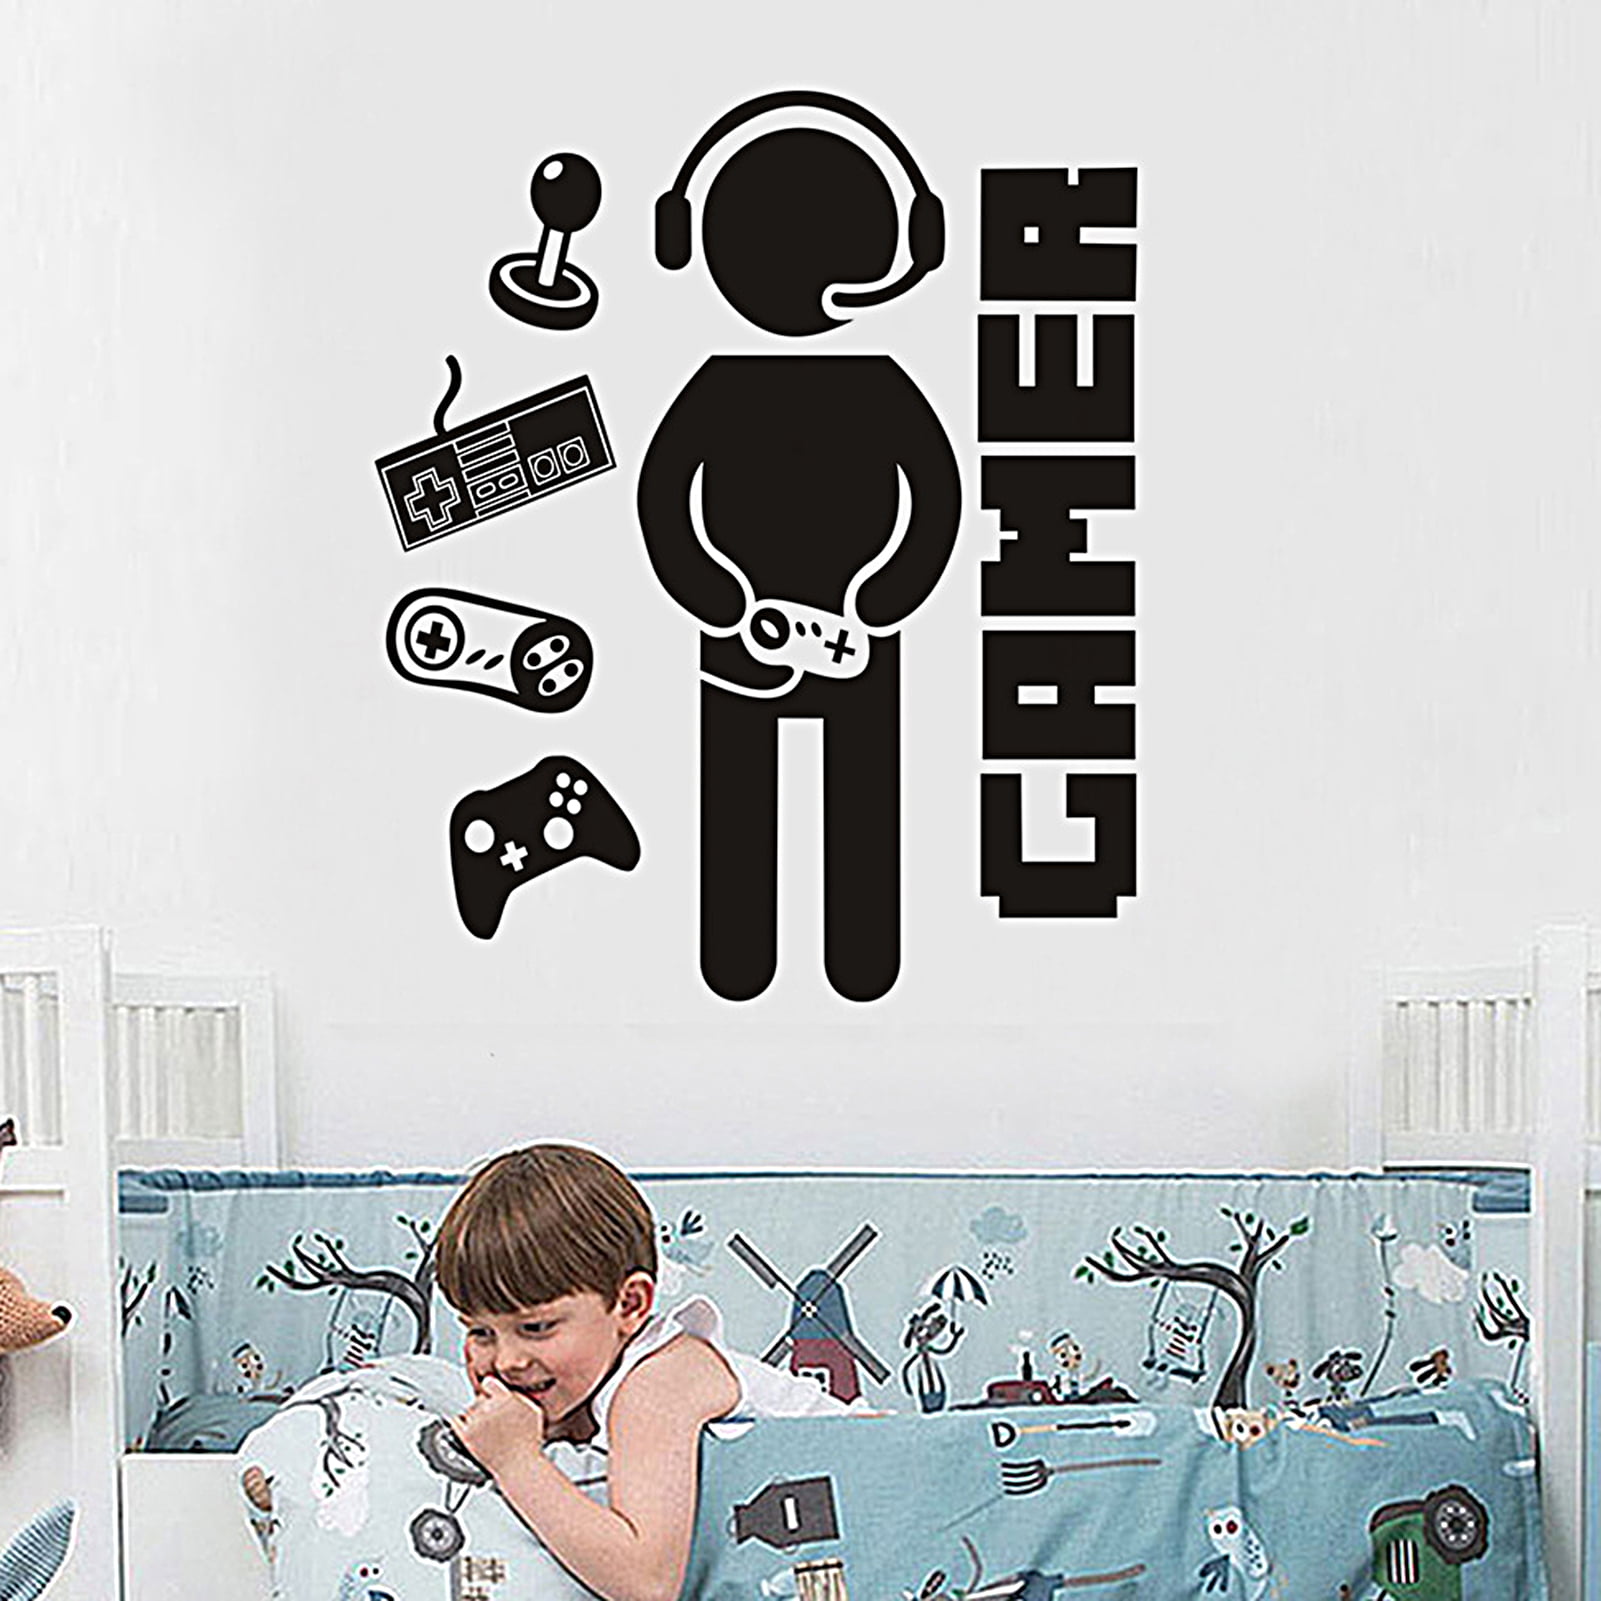 Wall Decal Gamer Evolution Video Game Kids Room Vinyl Sticker Art